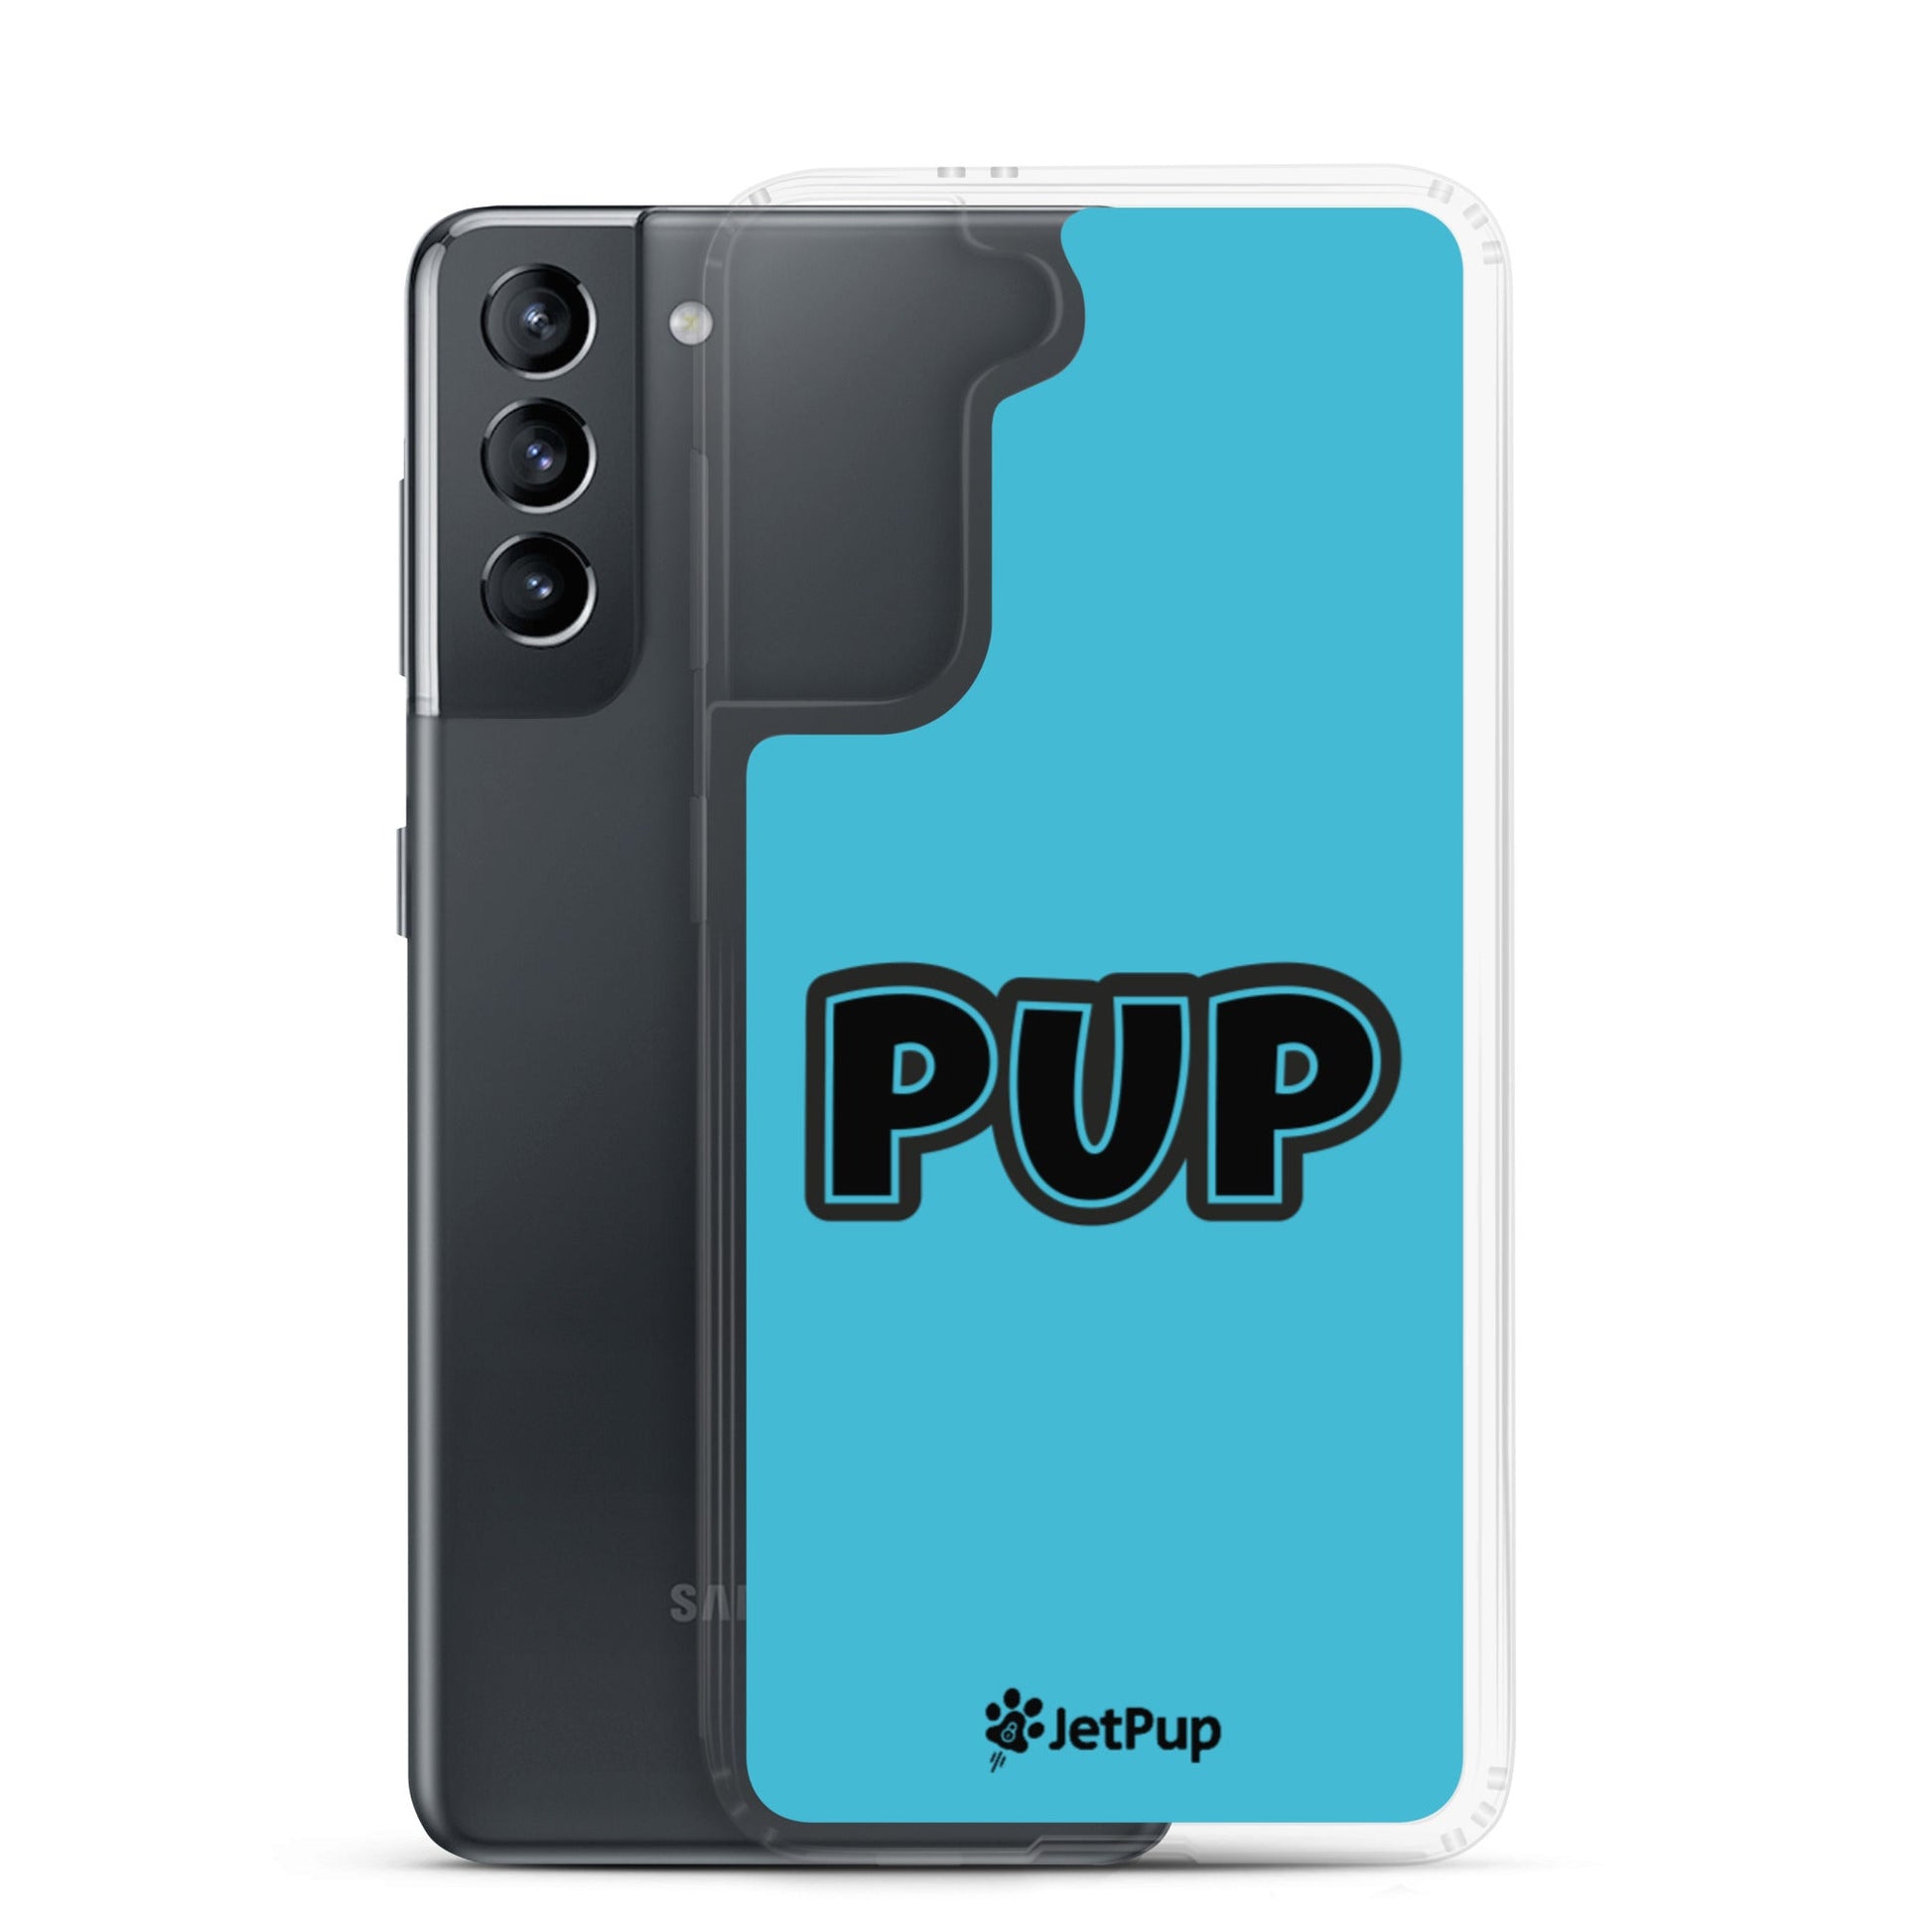 Pup Samsung Case - Sky Blue - JetPup